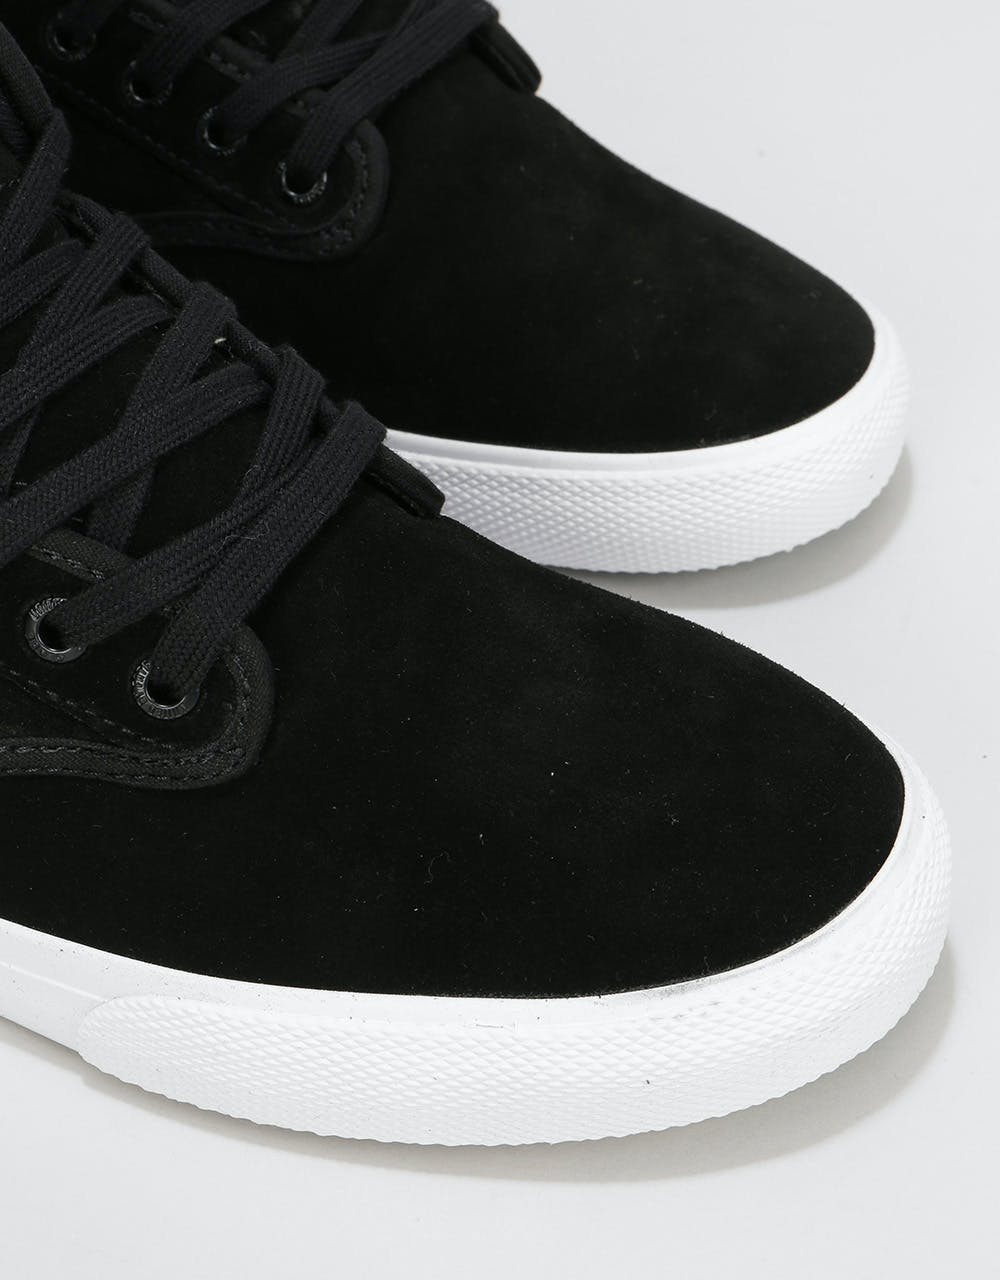 Globe Motley Mid Skate Shoes - Black Suede/White